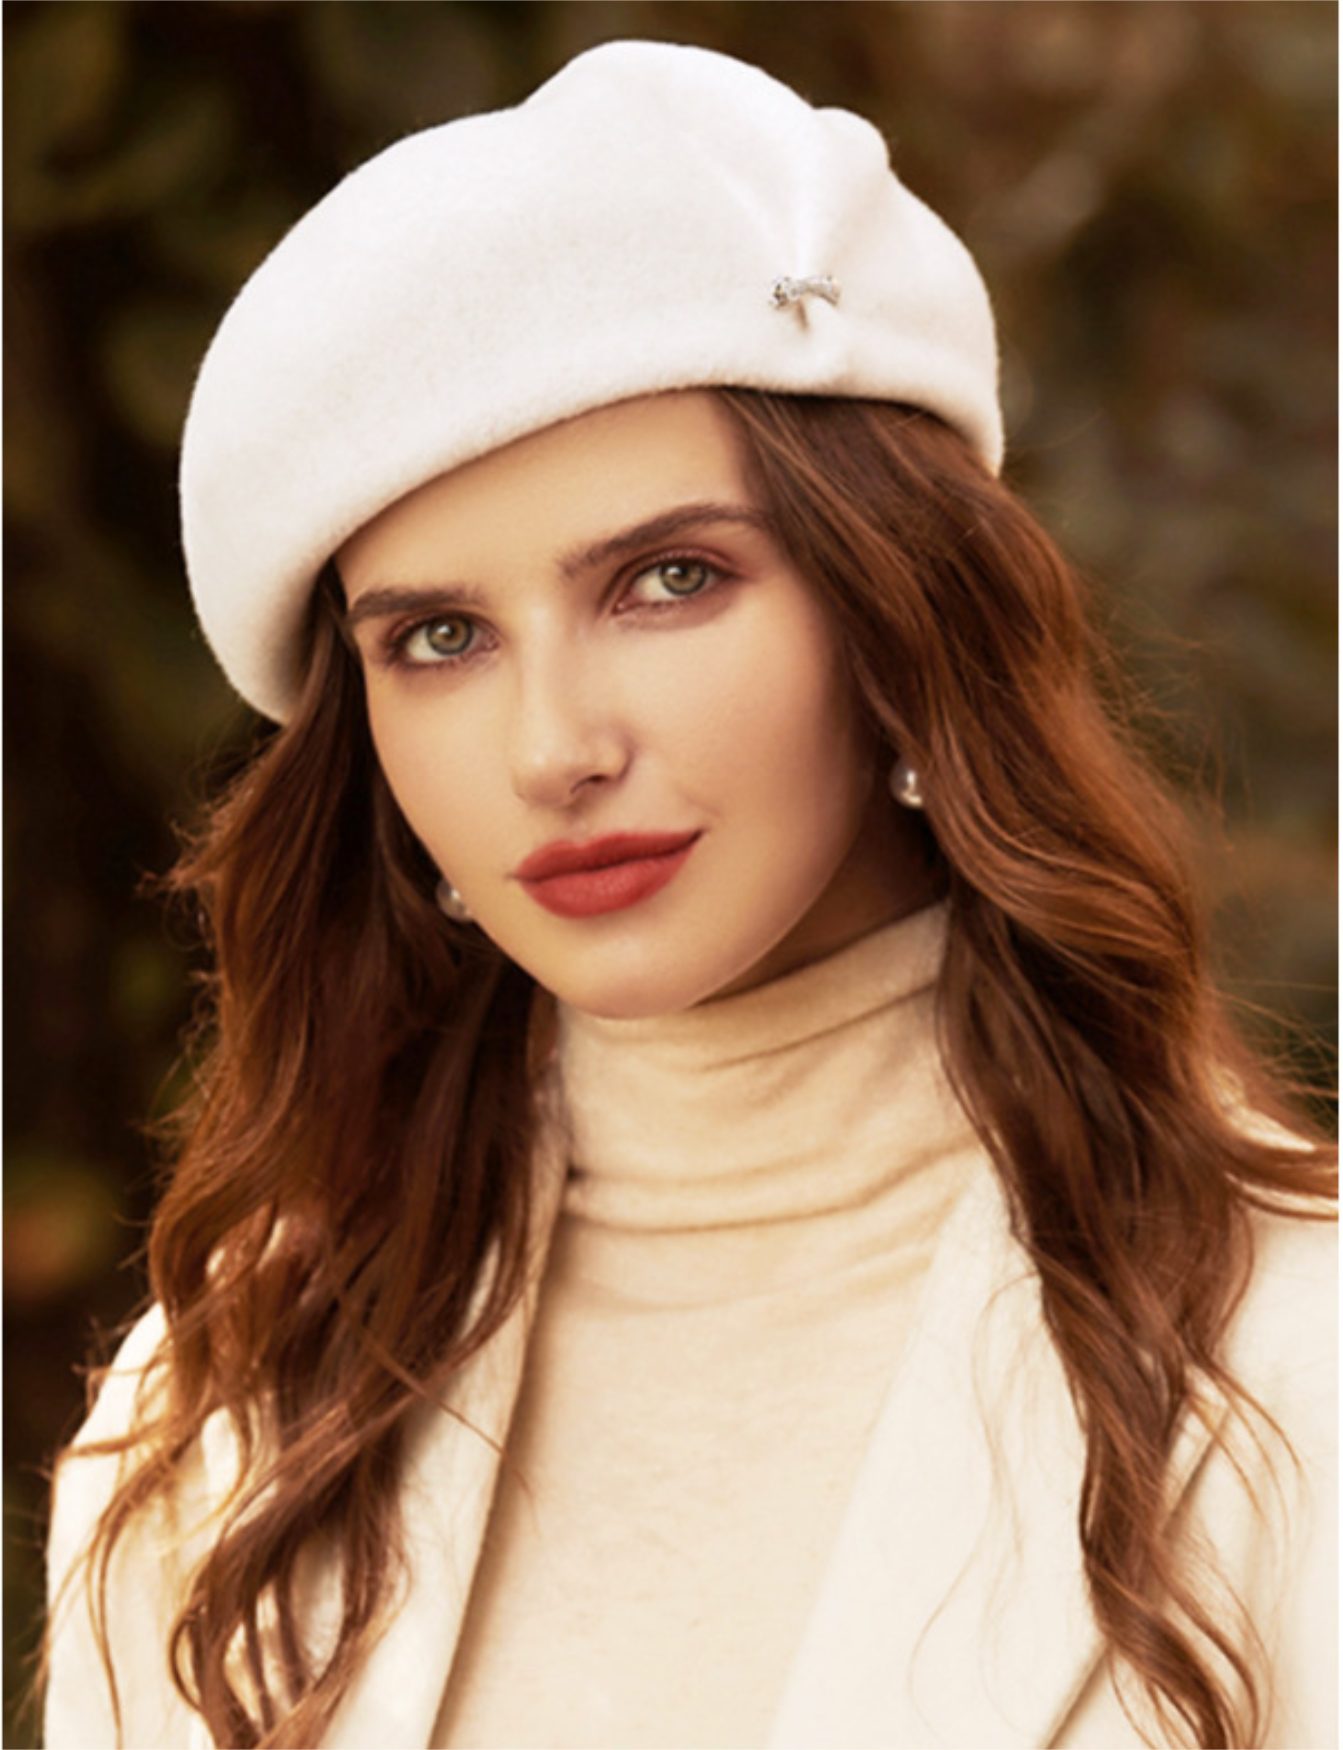 Frauen Kappe Weiß Baskenmützen Baskenmütze Beret Retro-Mode Weibliche Bonnet Wool MAGICSHE